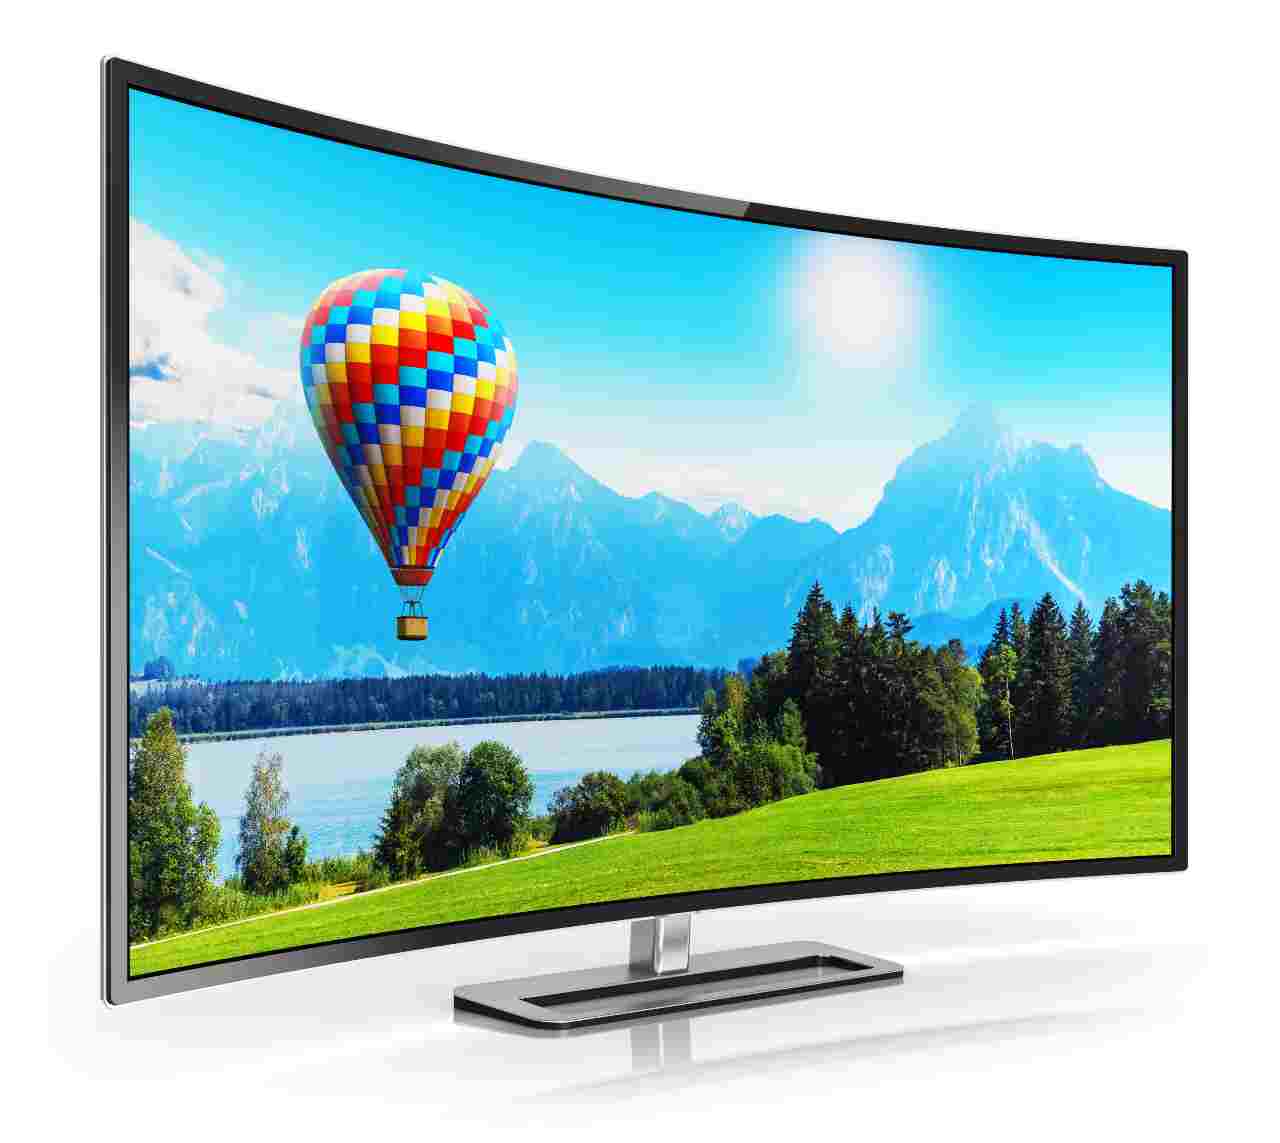 TV OLED (Adobe Stock)